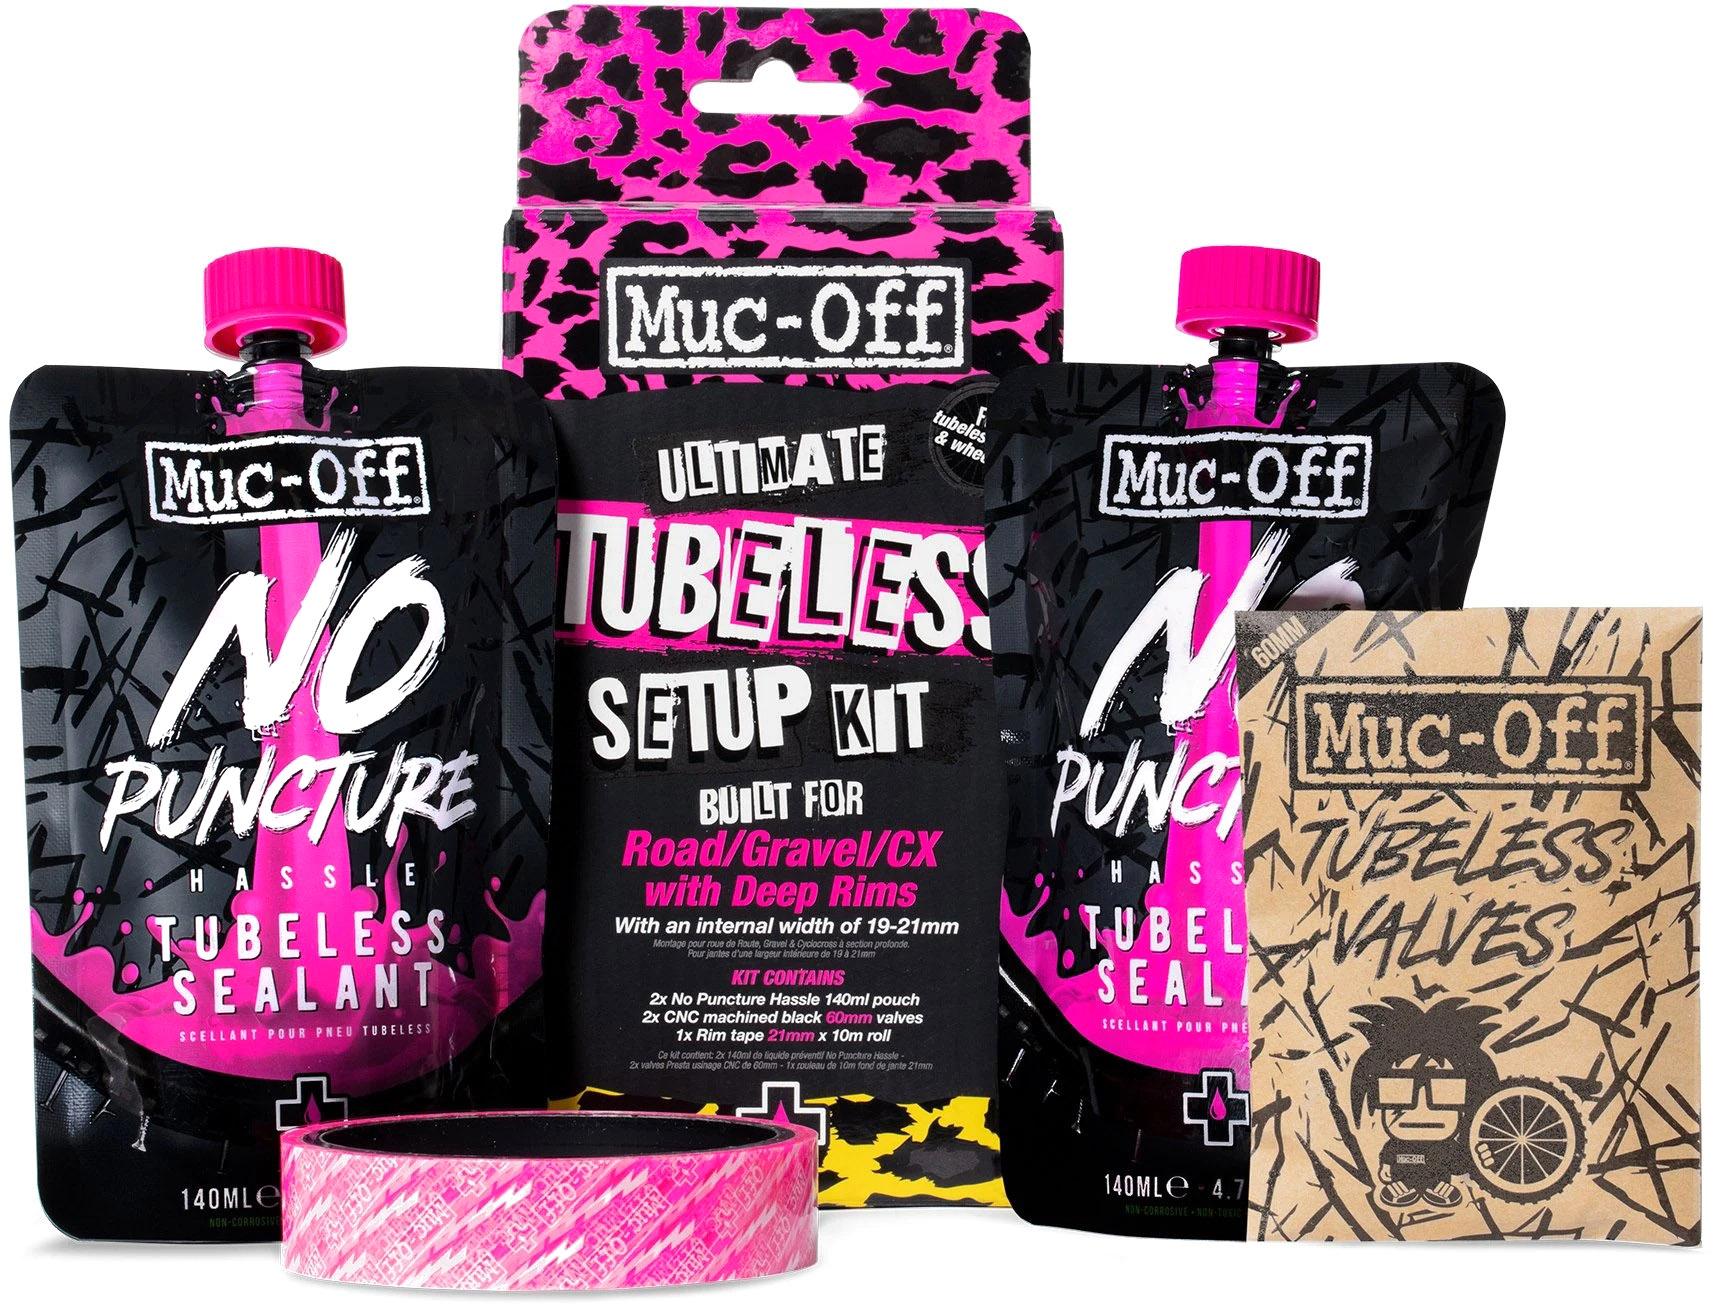 Muc-off Ultimate Tubeless Dh/plus Setup Kit - Black/pink